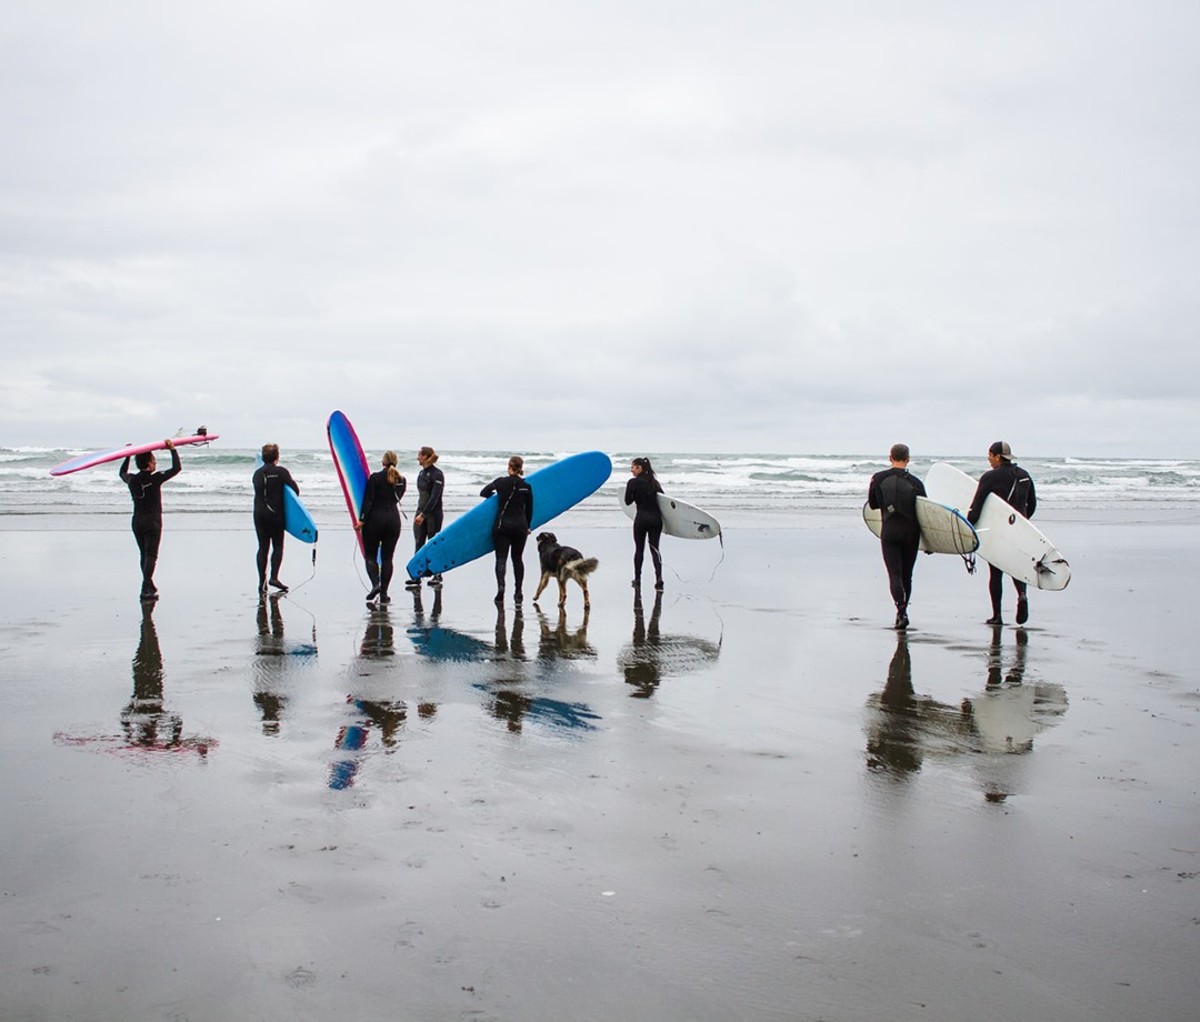 Surfers on the beach near Seabrook, Washington